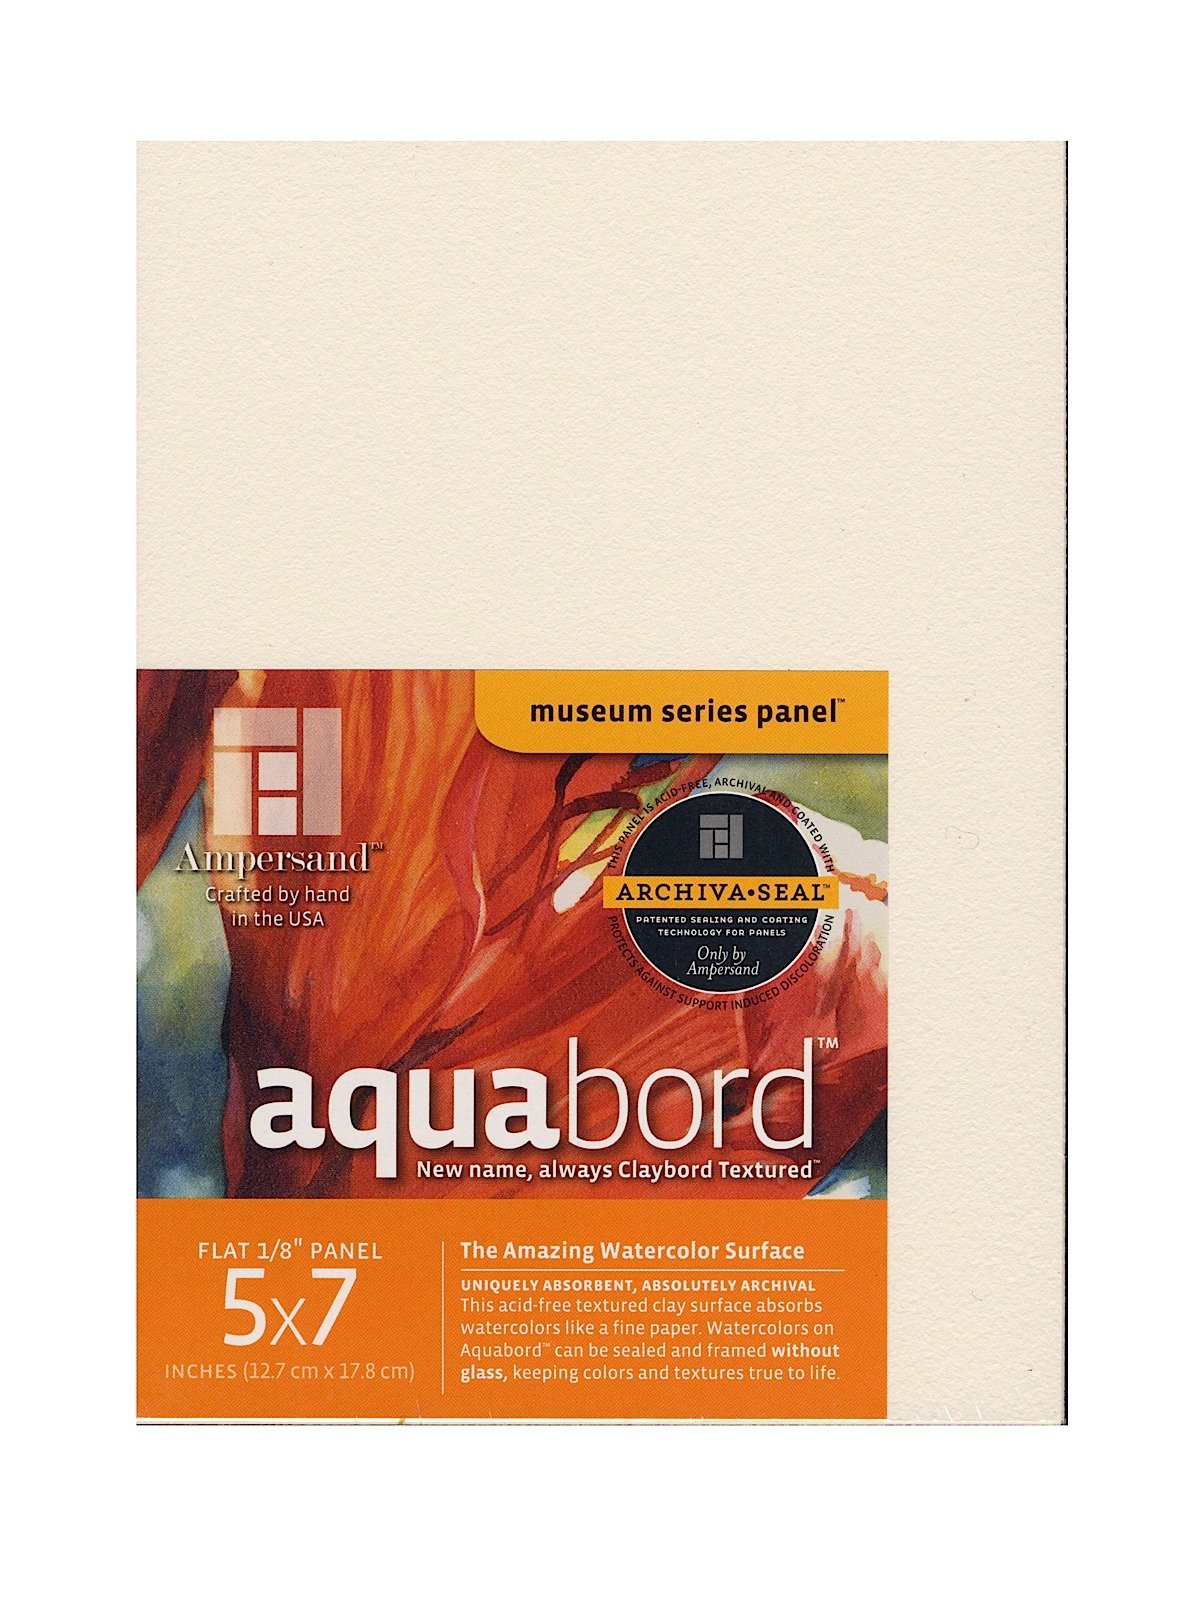 Ampersand Aquabord 8 x 8 Inches